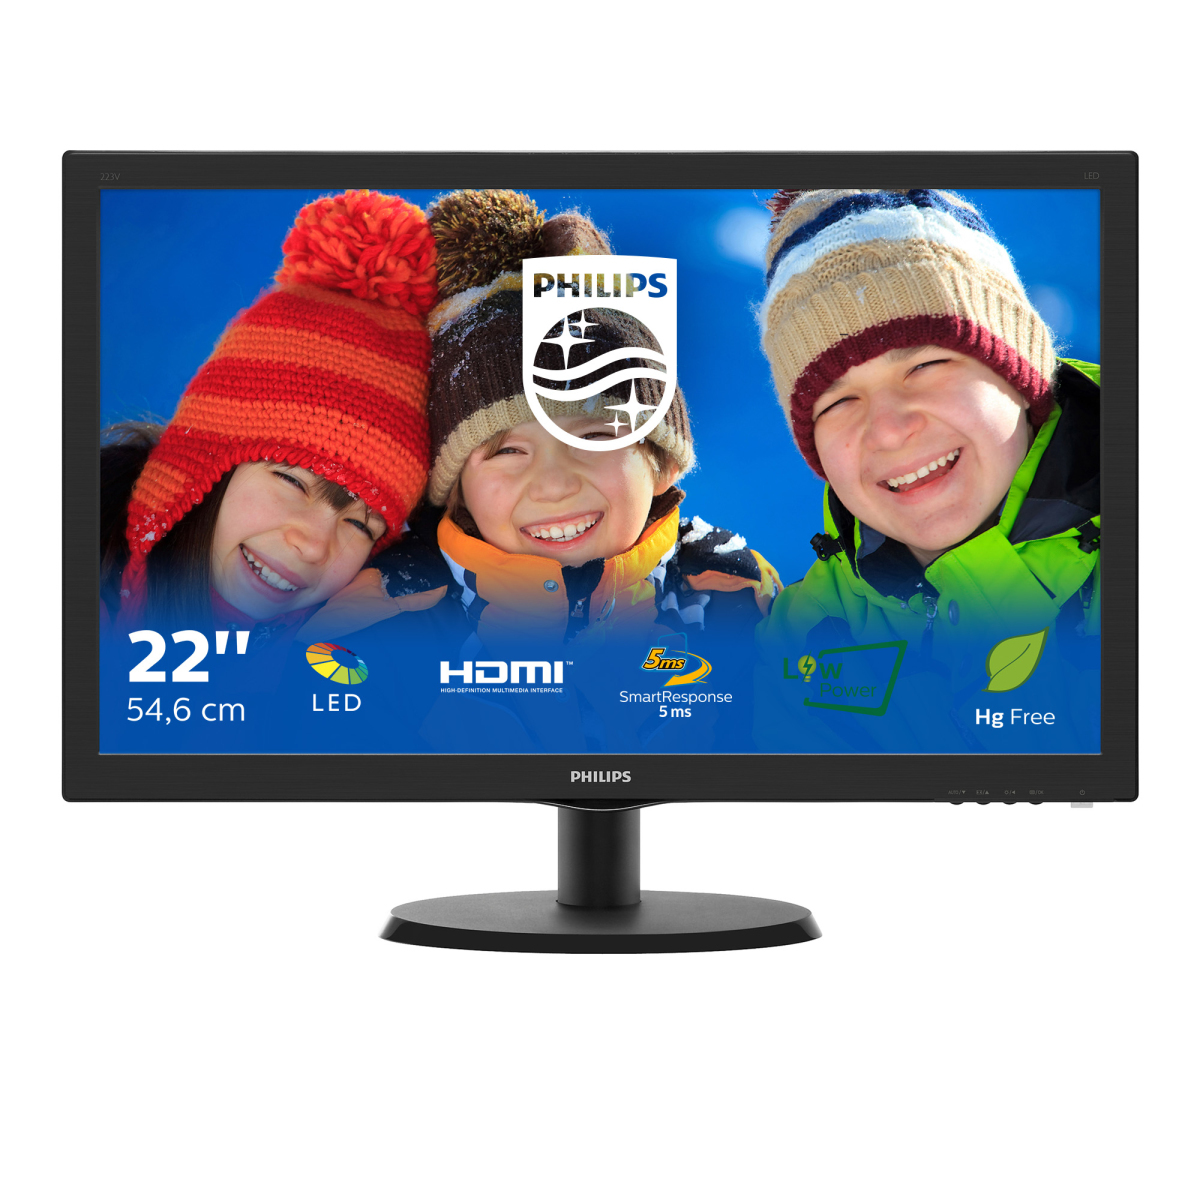 Philips LCD-monitor met SmartControl Lite 223V5LHSB2/00